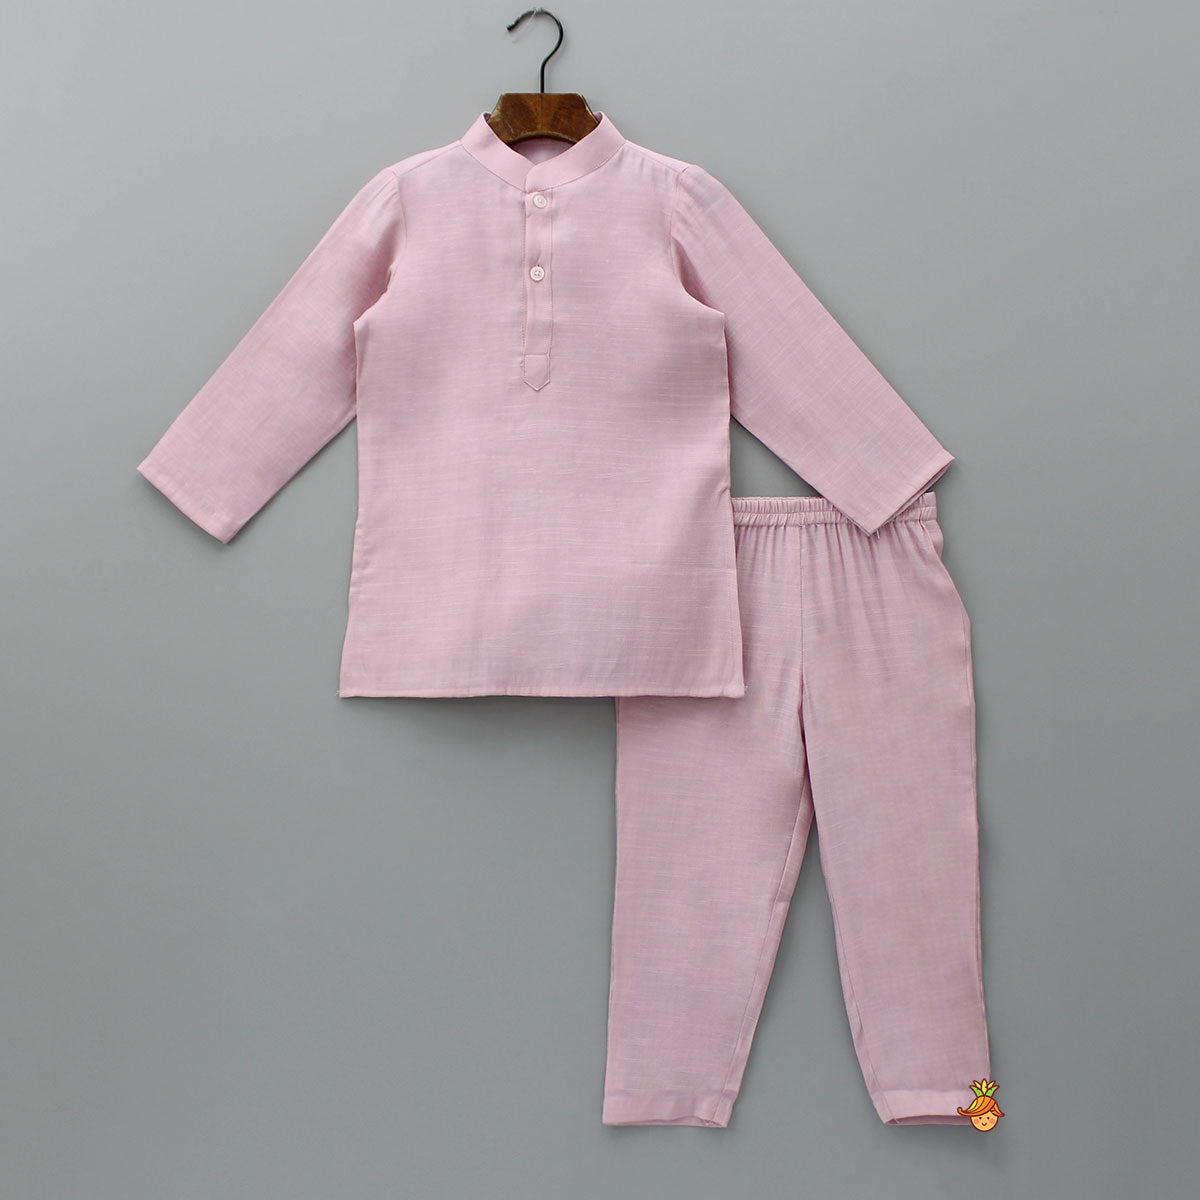 Blue Floral Printed Jacket With Pink Kurta And Pyjama